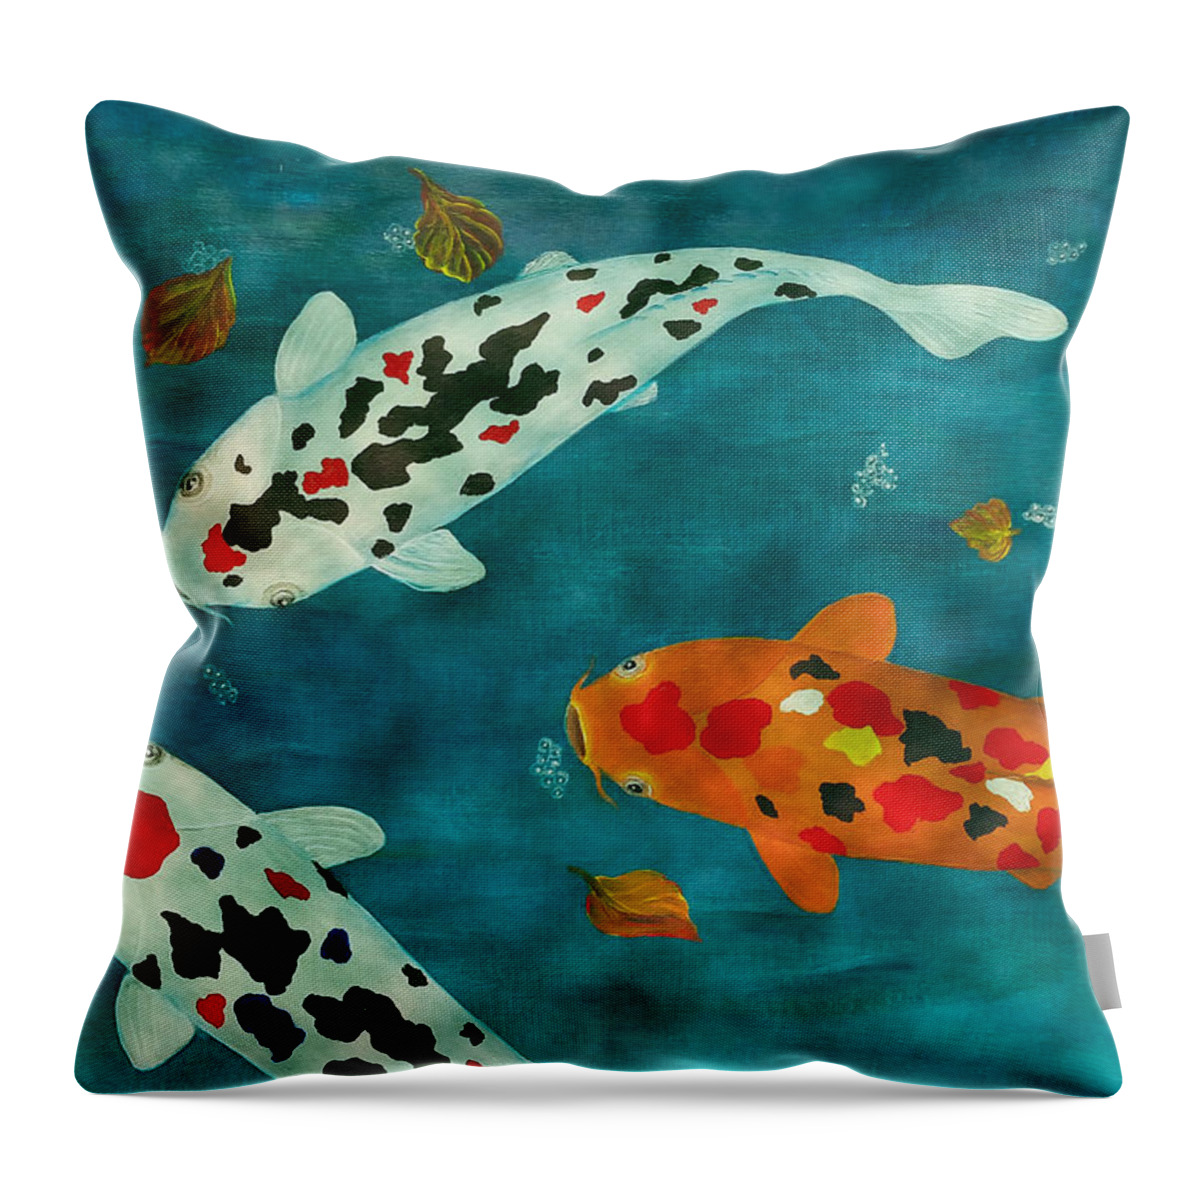 Koi Fish Throw Pillow featuring the painting Playful Koi Fishes original acrylic painting by Georgeta Blanaru